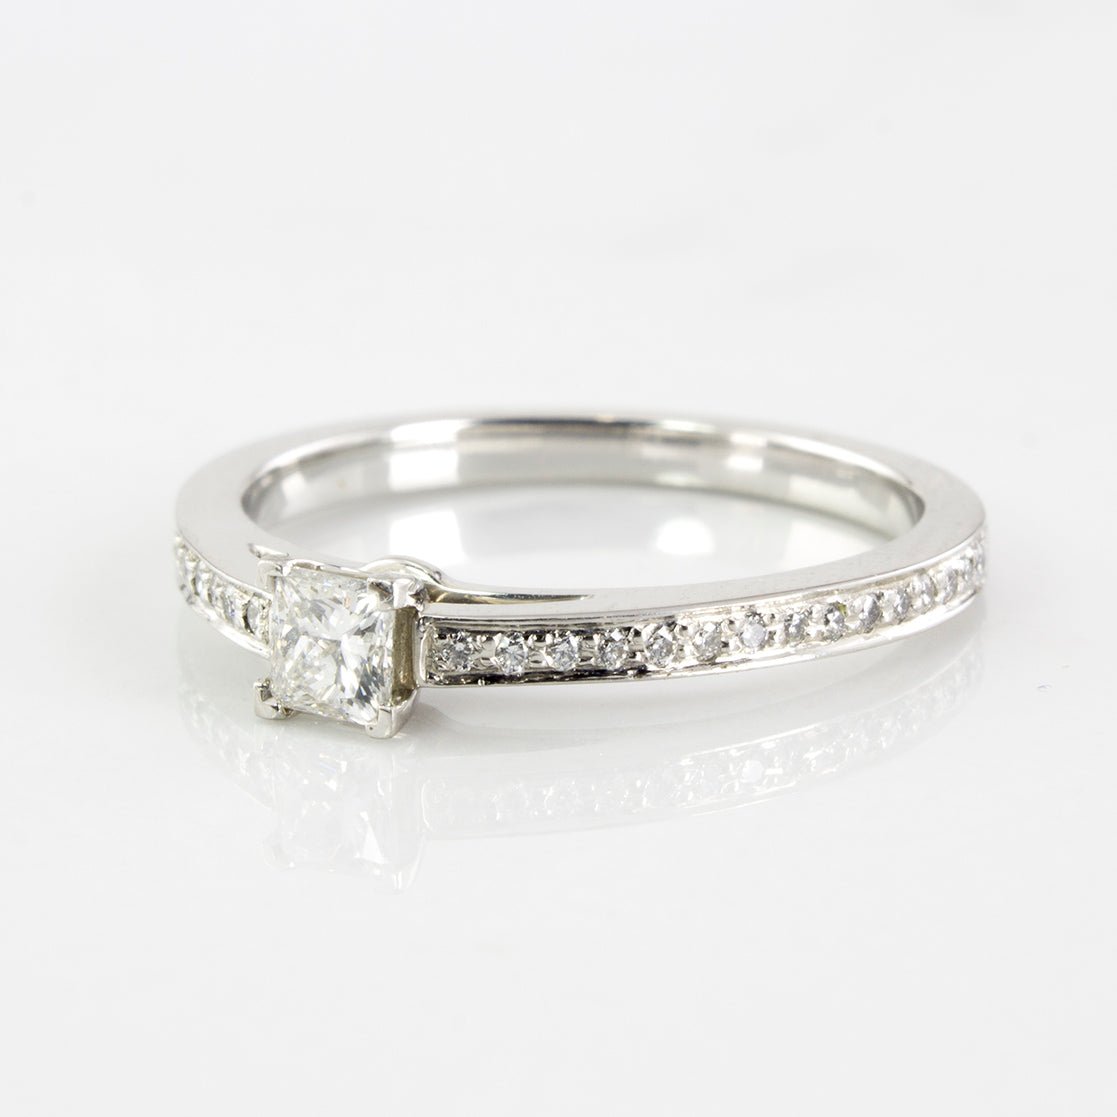 'Tiffany & Co.' Platinum Diamond Ring | 0.27 ctw | SZ 5 | - 100 Ways